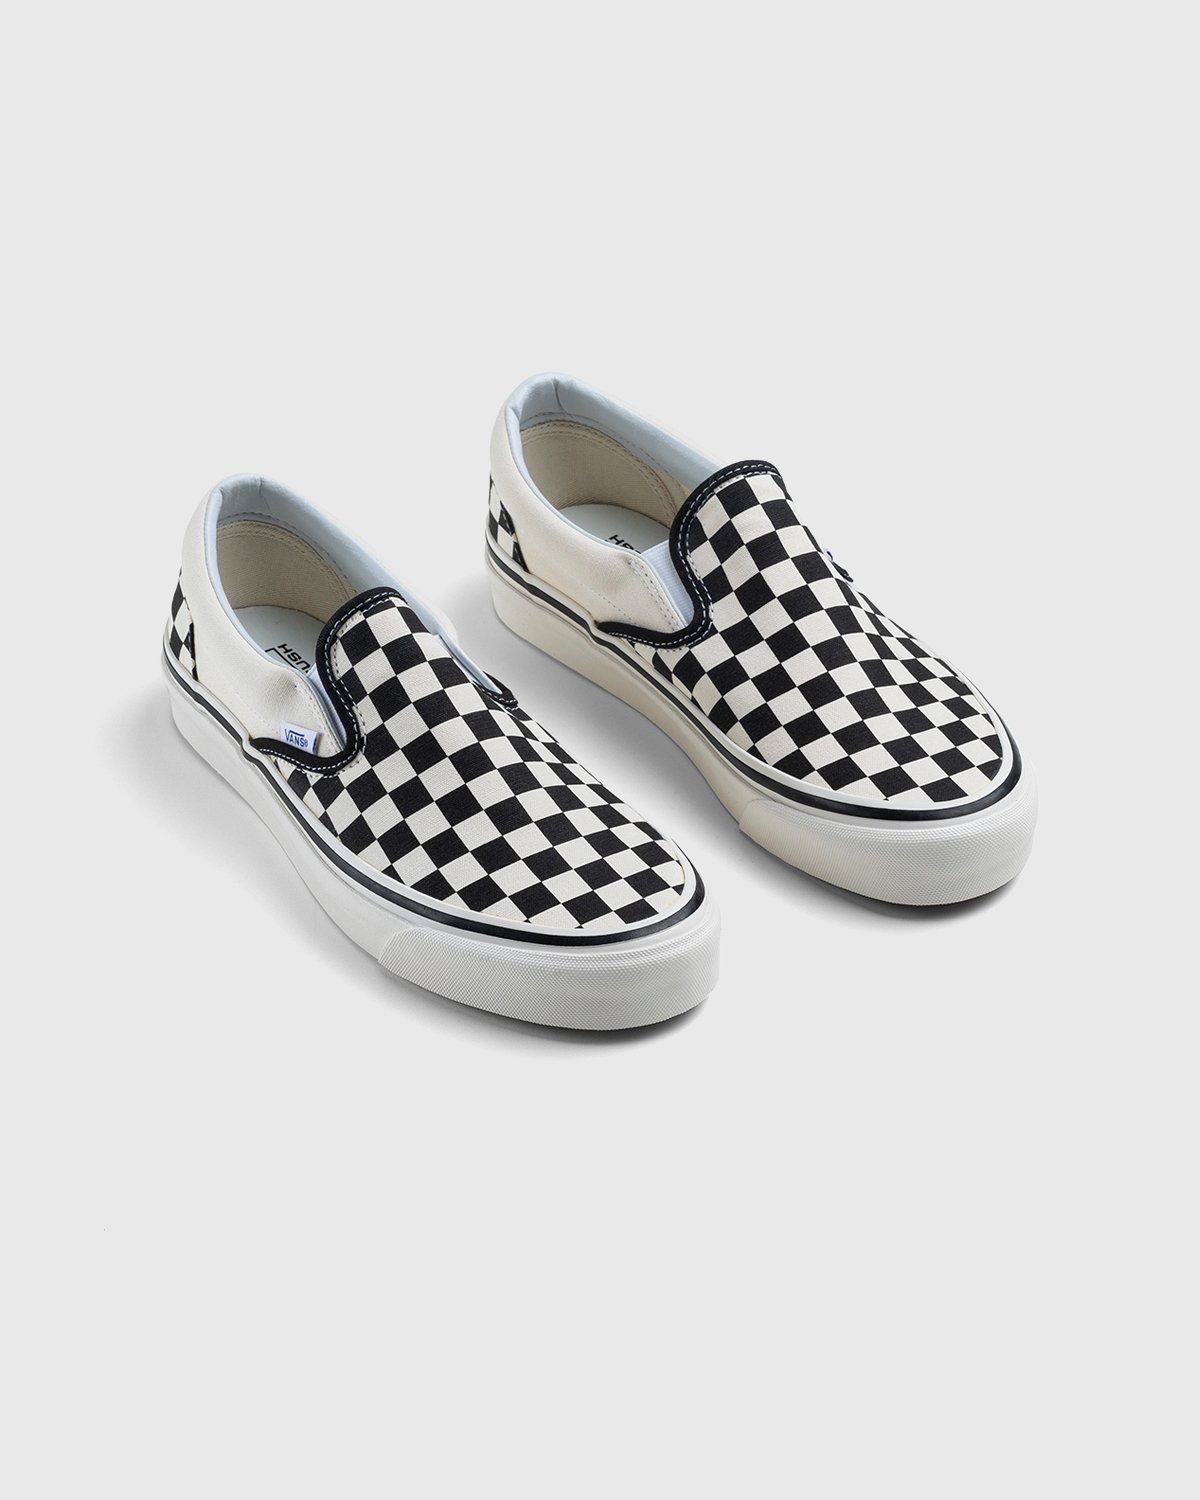 Vans – Anaheim Factory Classic Slip-On 98 DX Checkerboard - Slip-Ons - White - Image 3